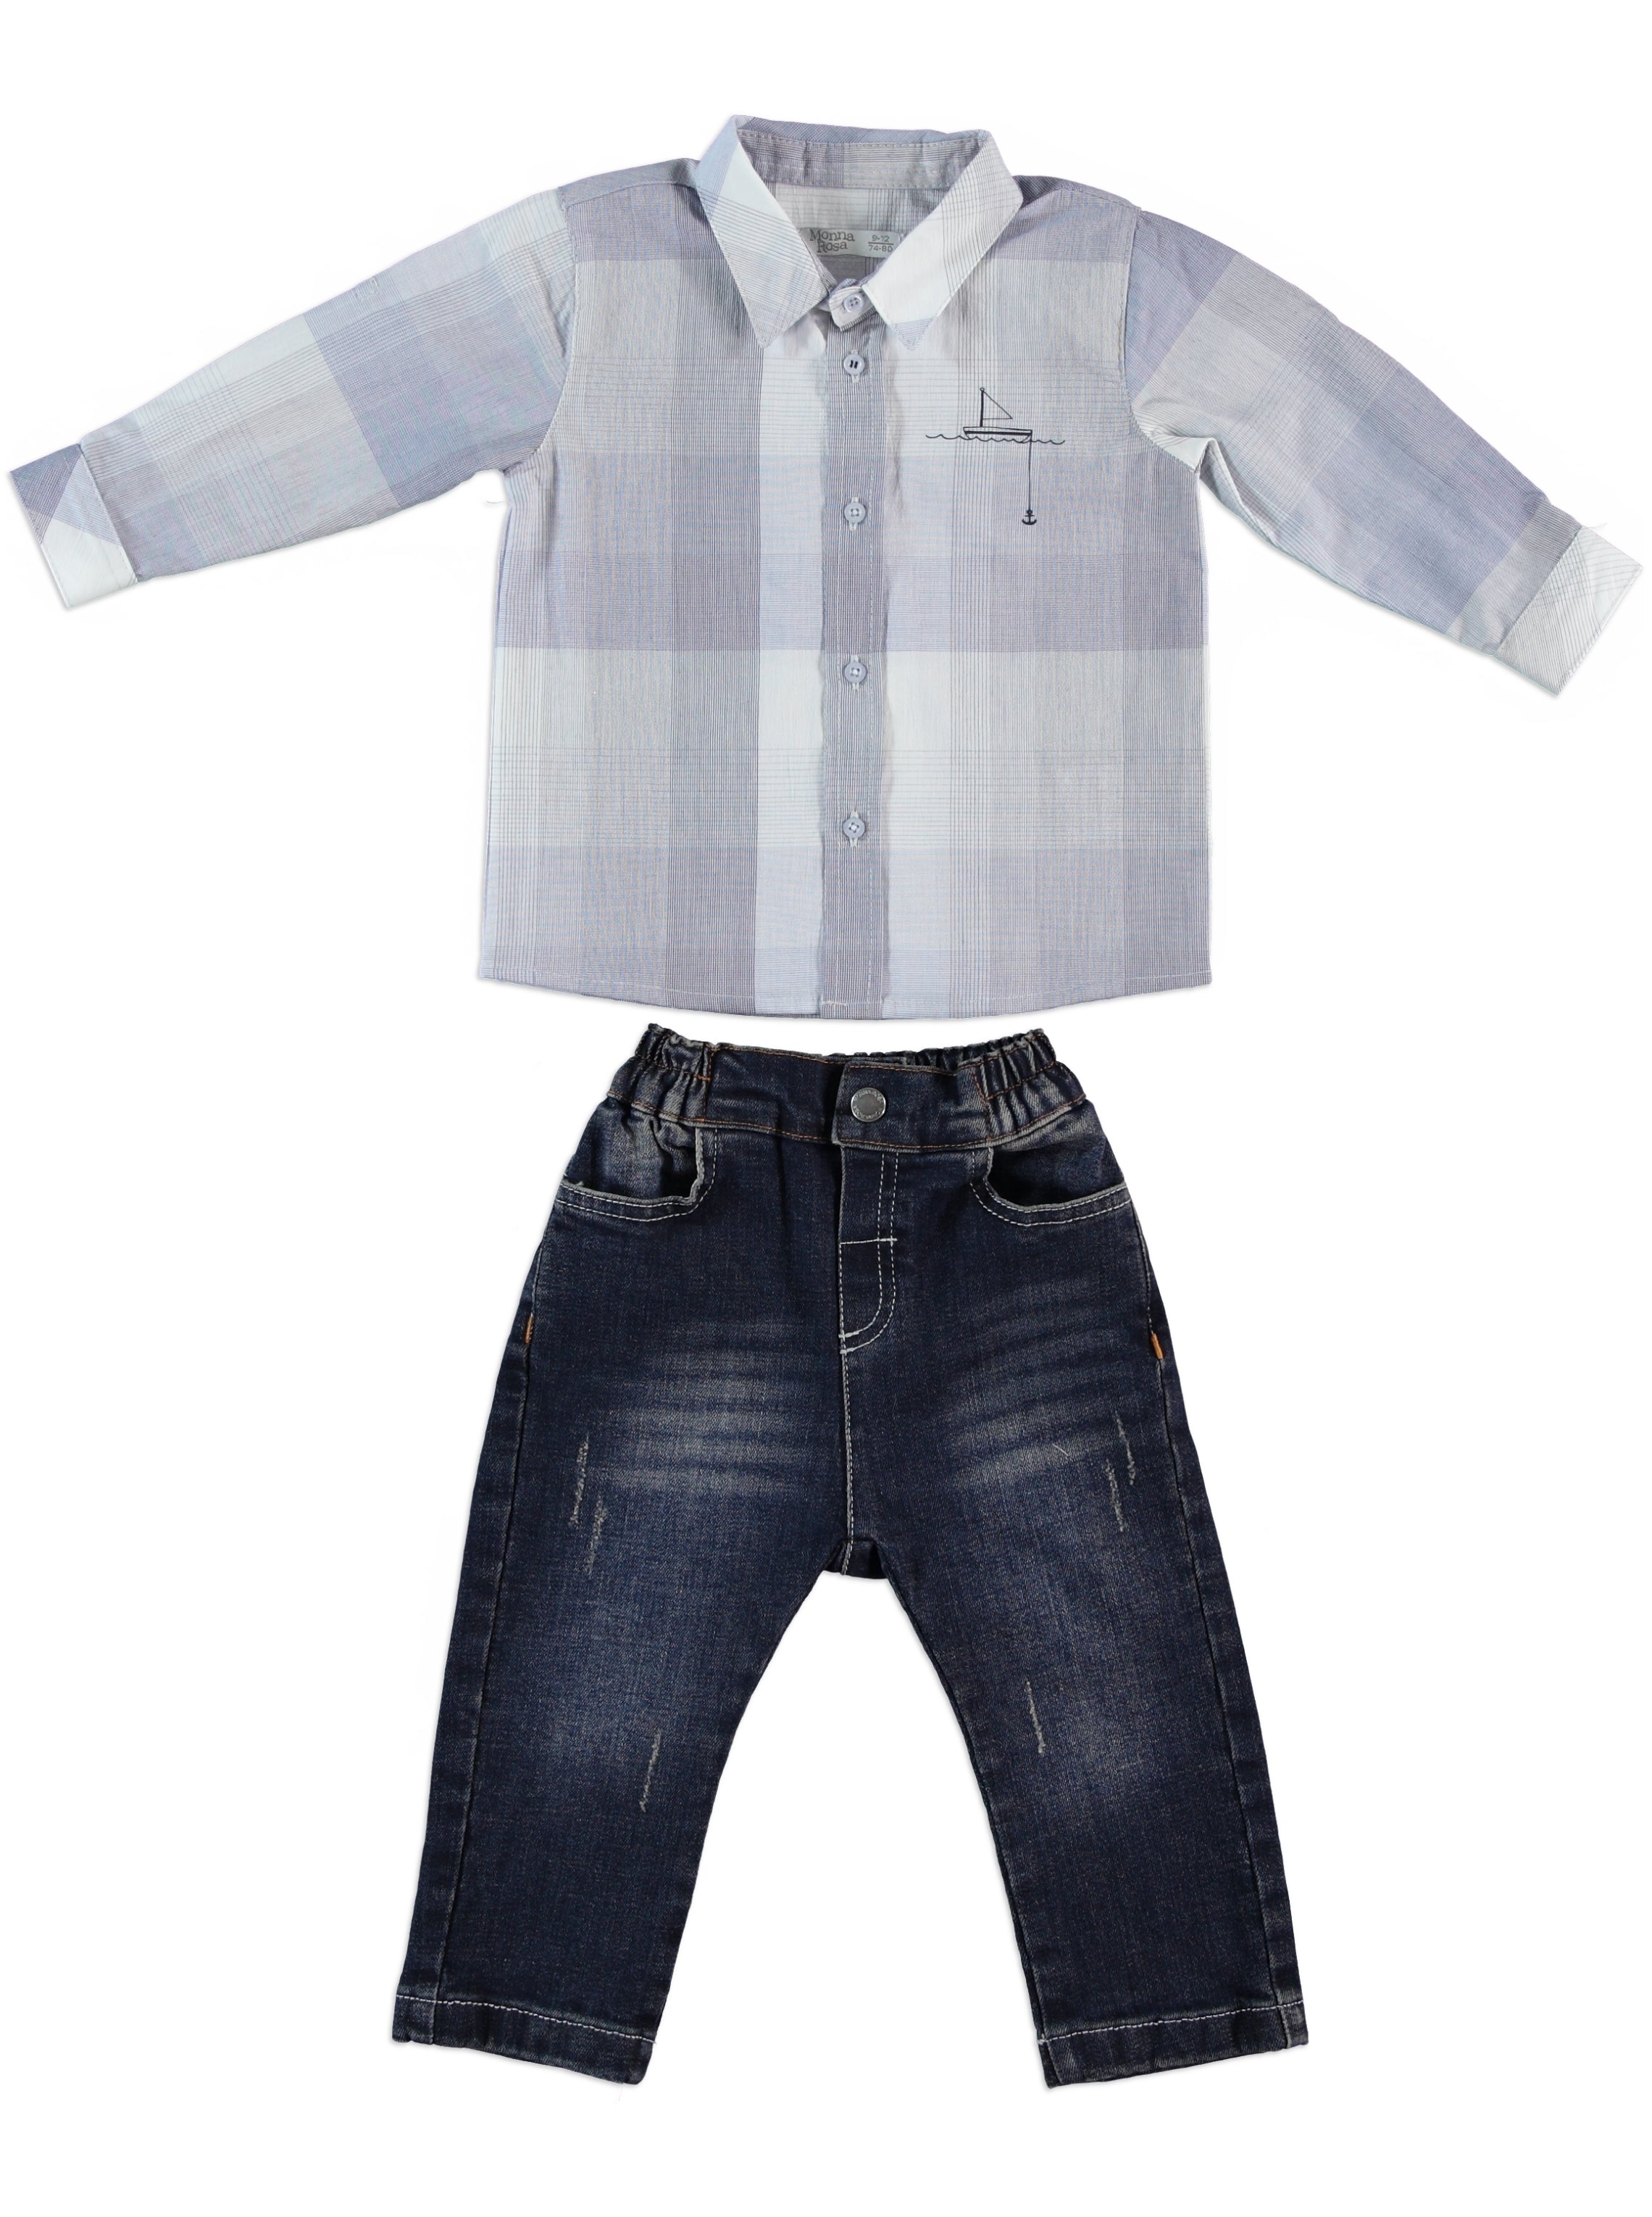 Patterned Gray & White Shirt With Denim Pants Toddler Set